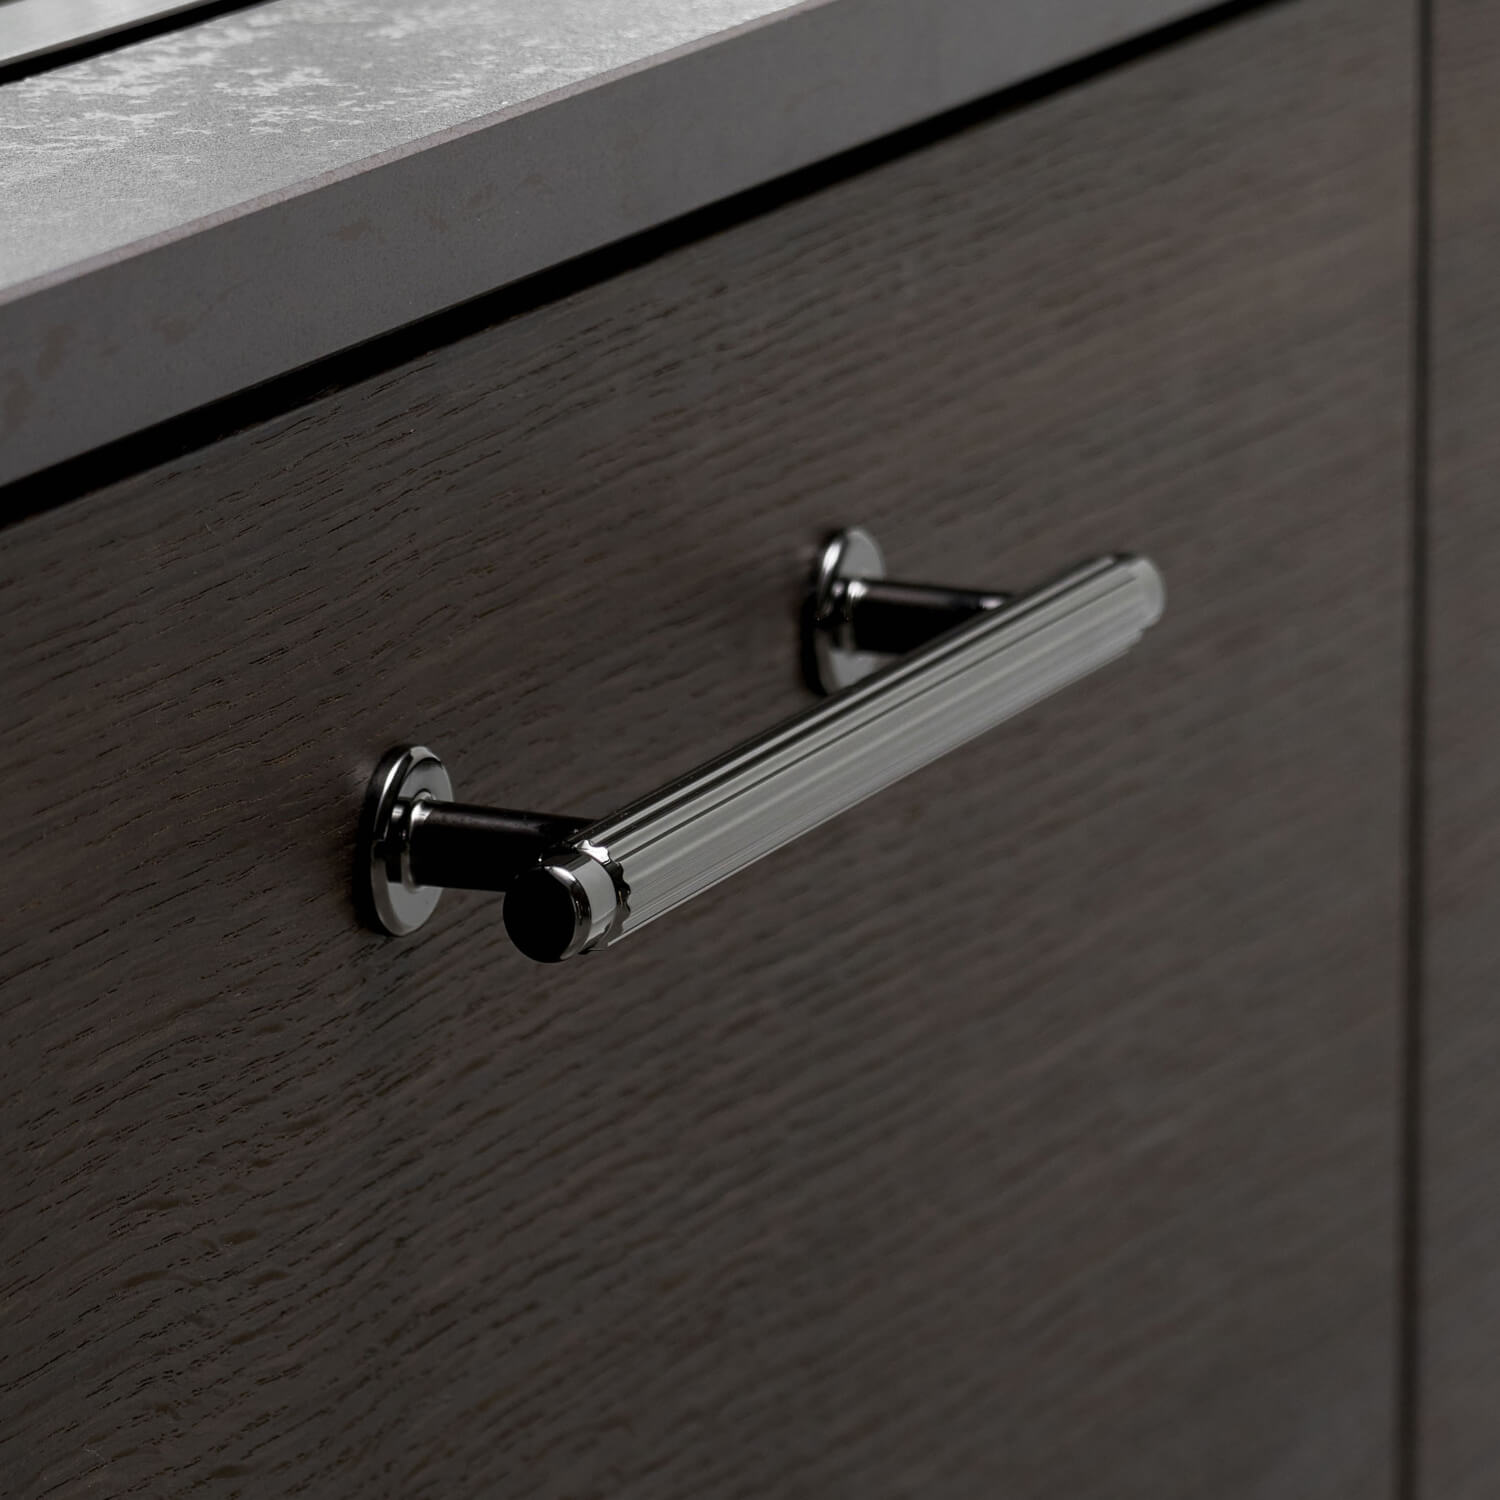 Furnipart Cabinet handle - Black nickel - Model Villa - Cabinet handles -  VillaHus